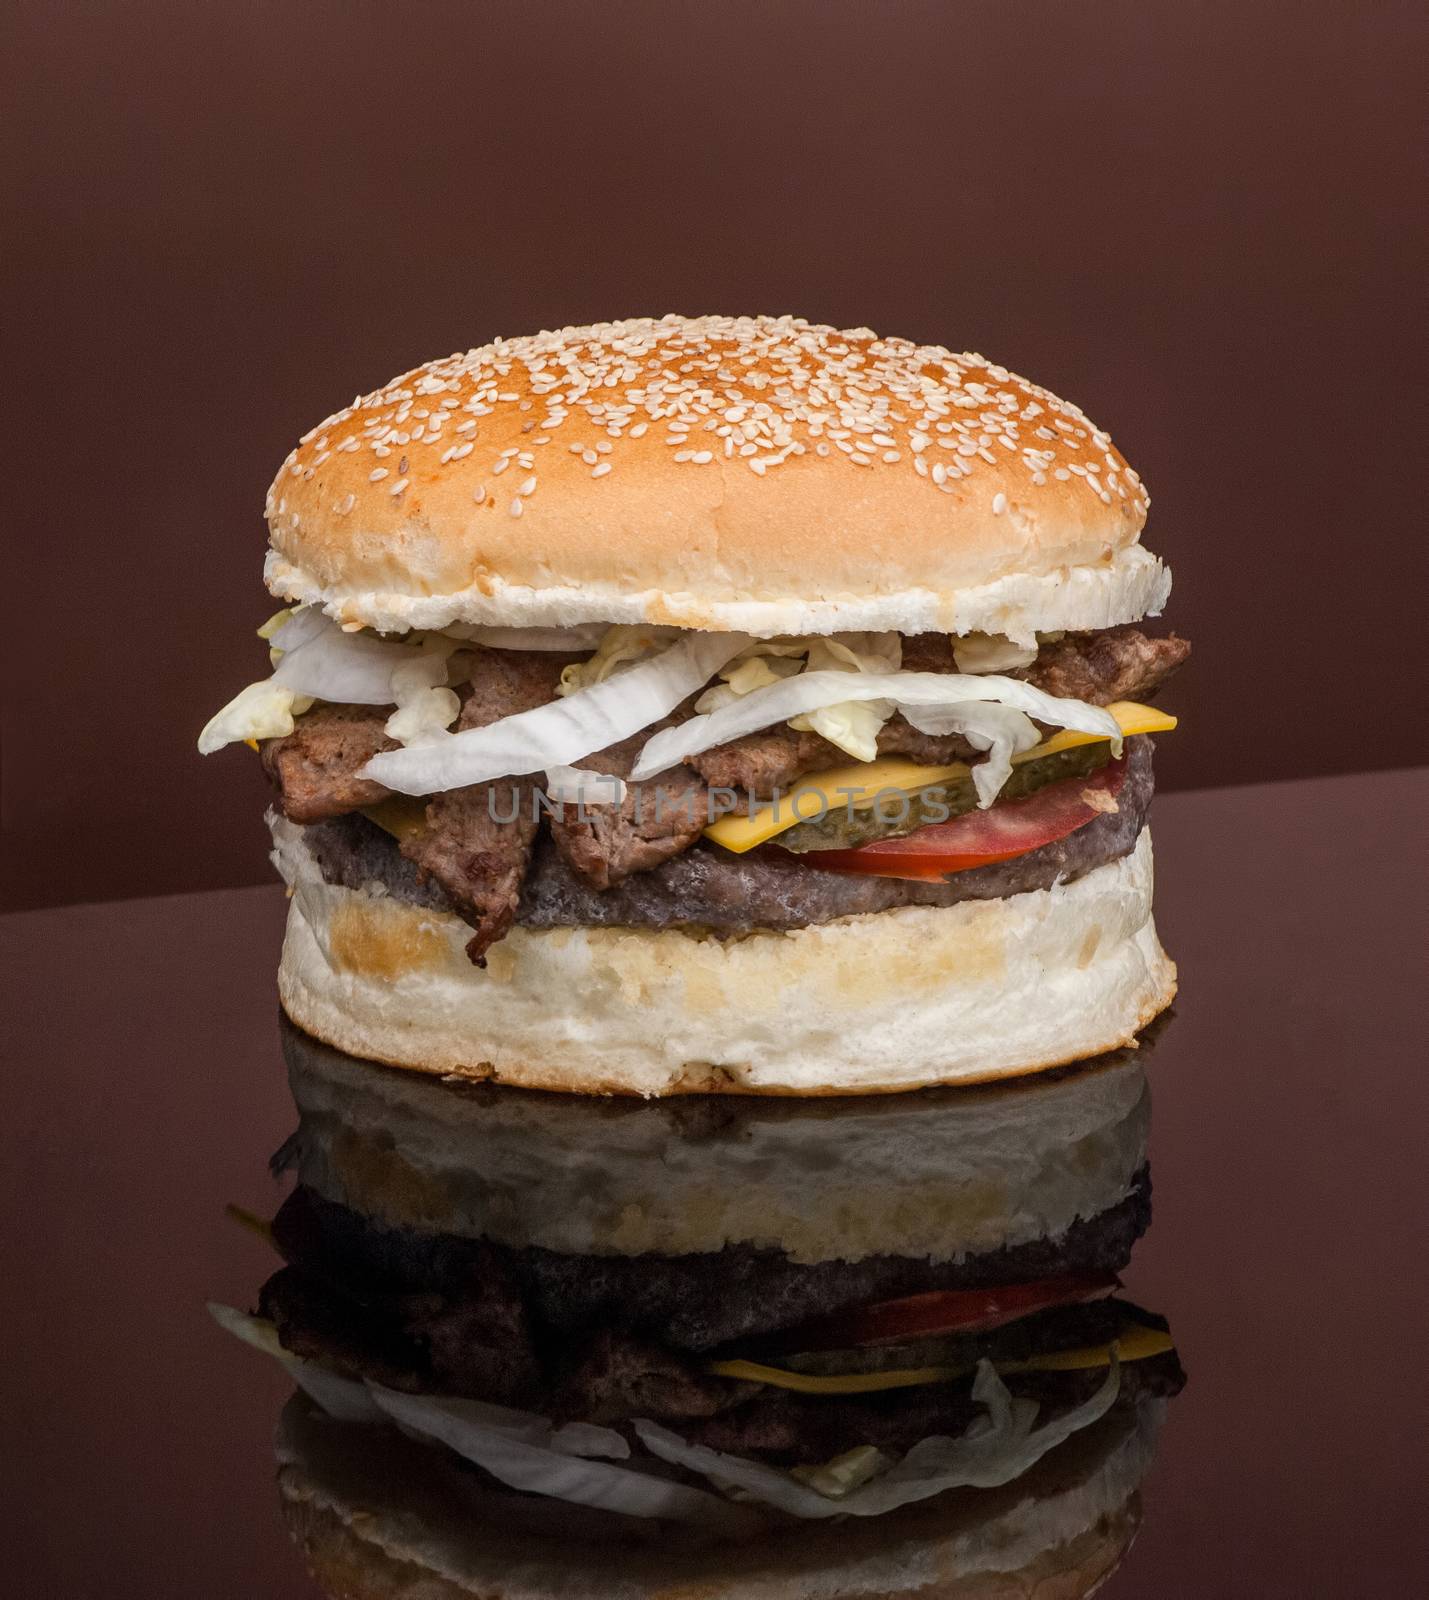 cheeseburger on a dark background by A_Karim